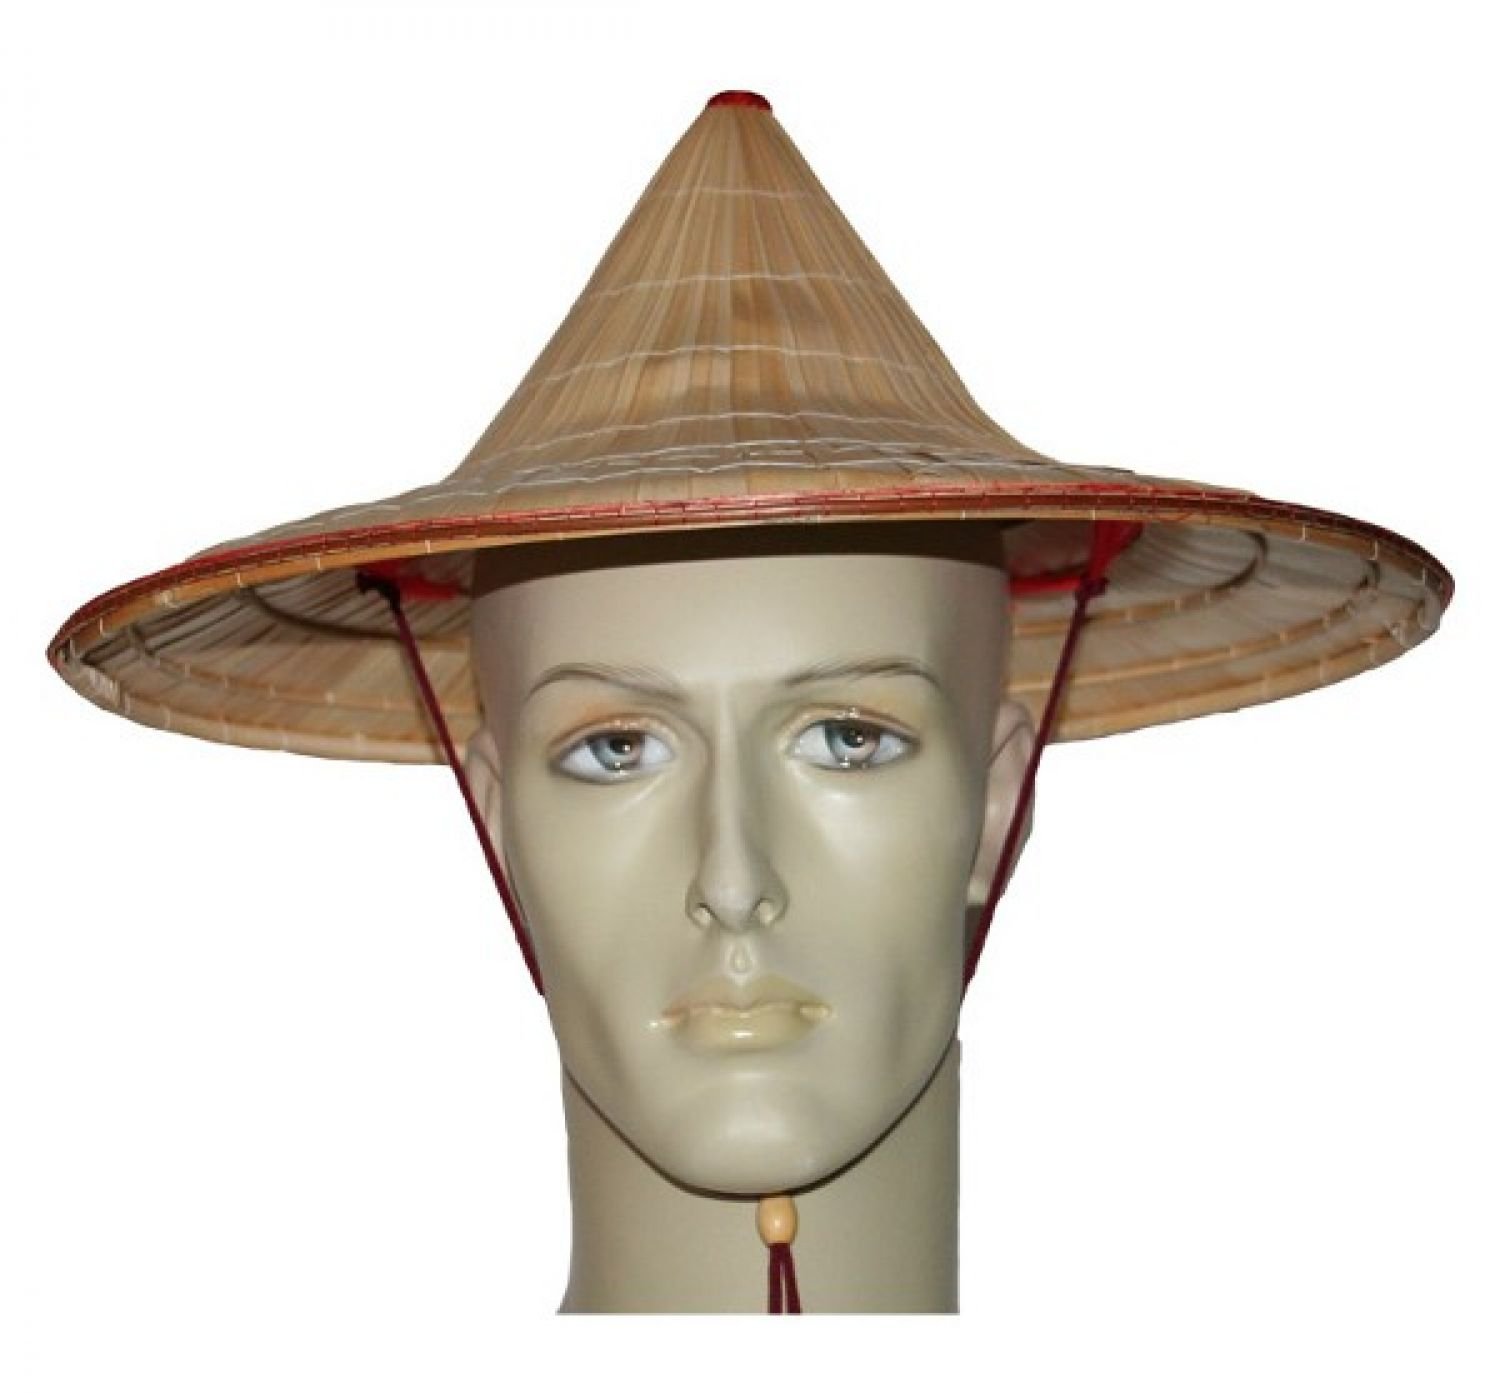 Bamboo hat. Бамбуковая шляпа доули. Китайская шляпа. Конусная шляпа китайская. Конусообразная шляпа.